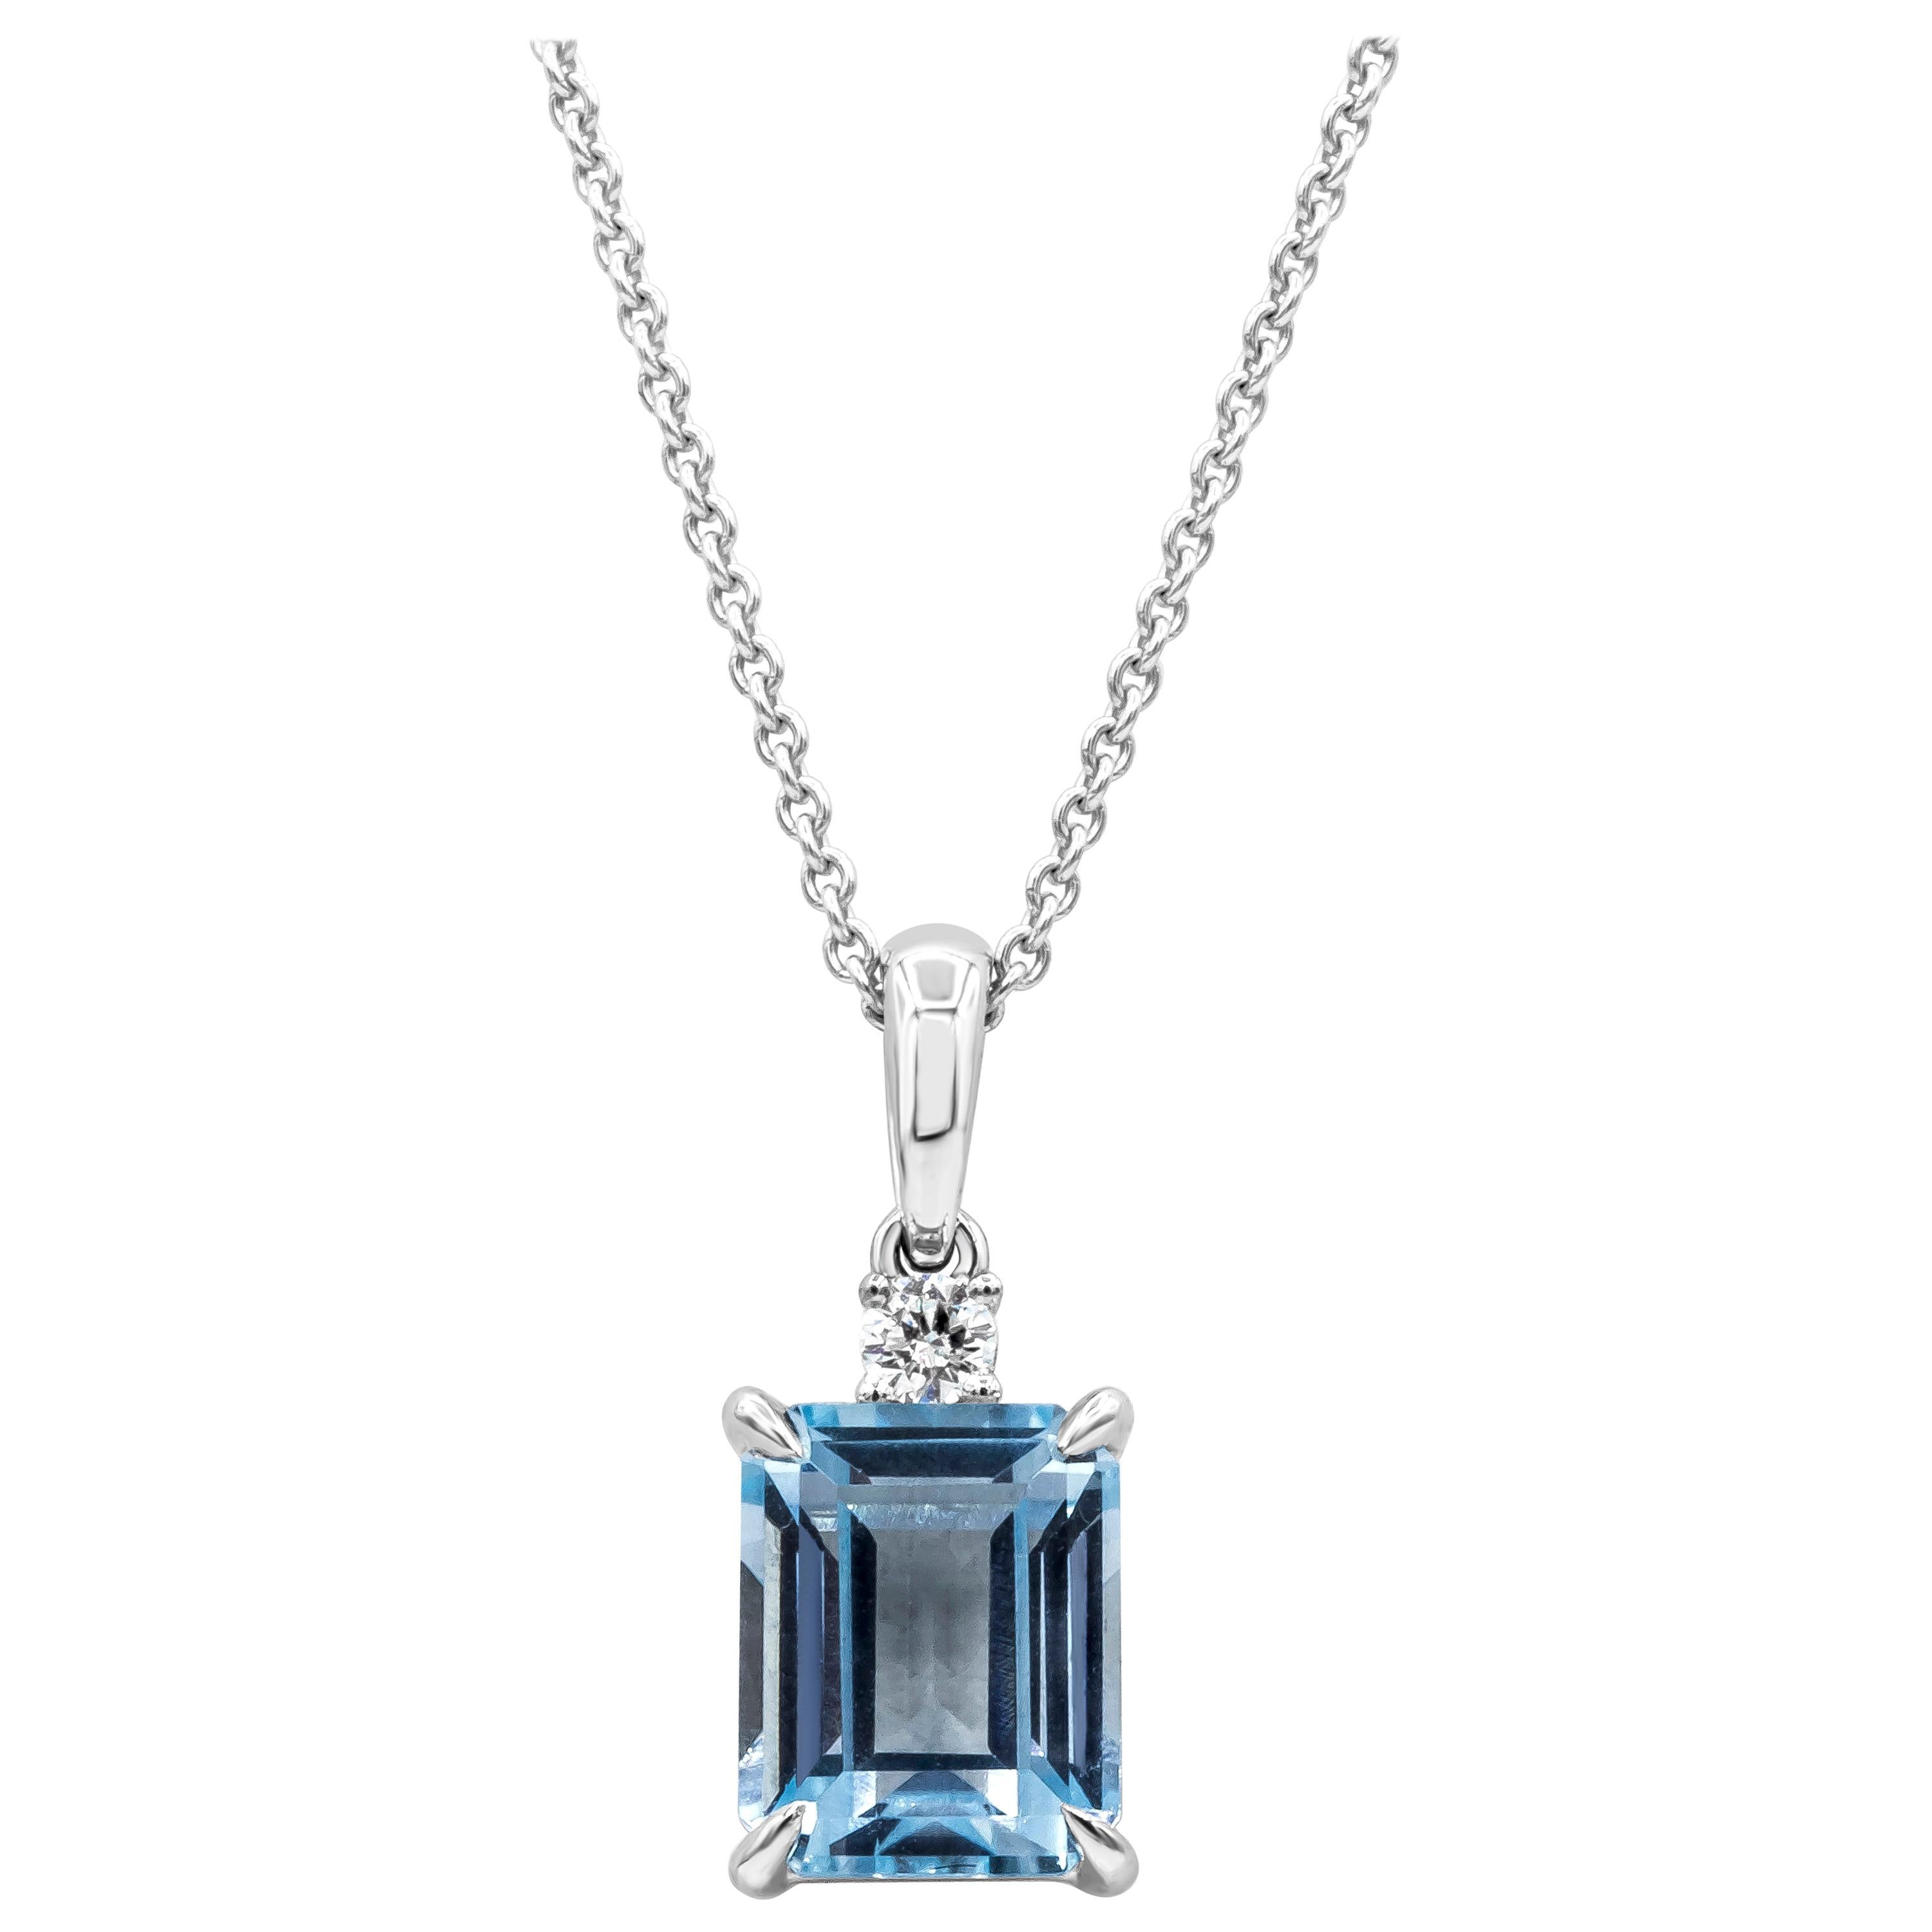 Roman Malakov 3.09 Carat Blue Topaz and Diamond Solitaire Pendant Necklace